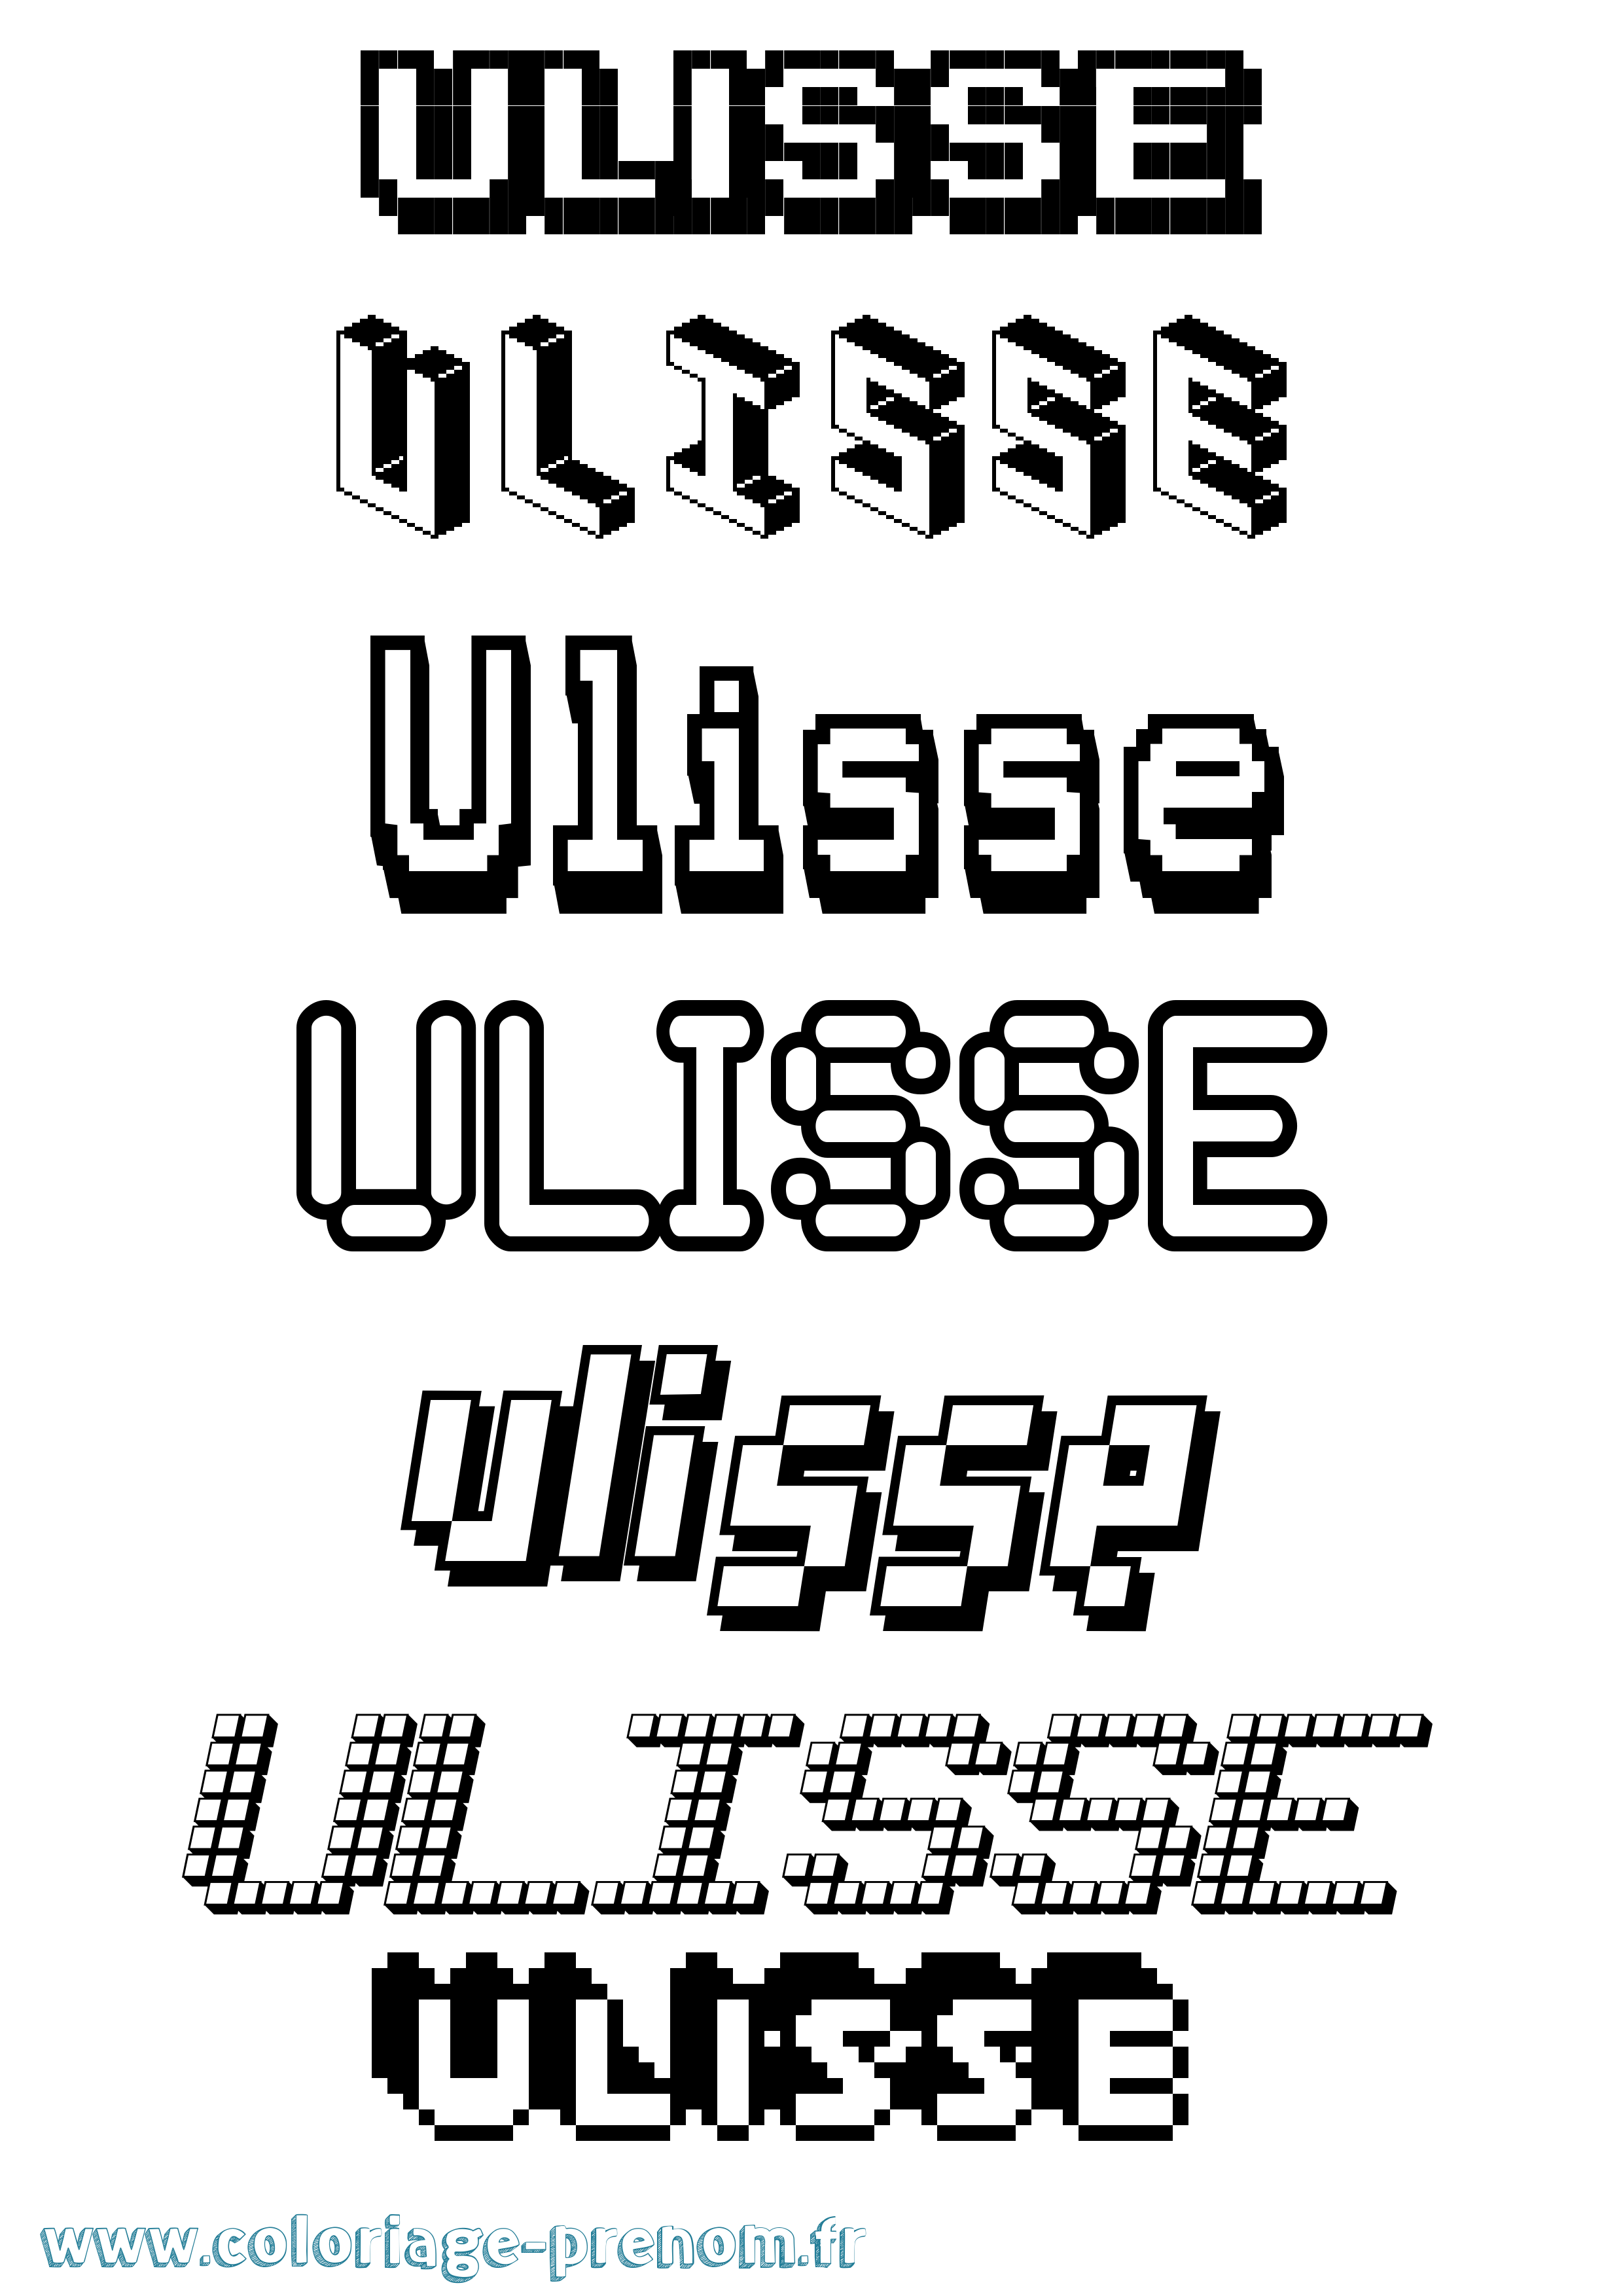 Coloriage prénom Ulisse Pixel